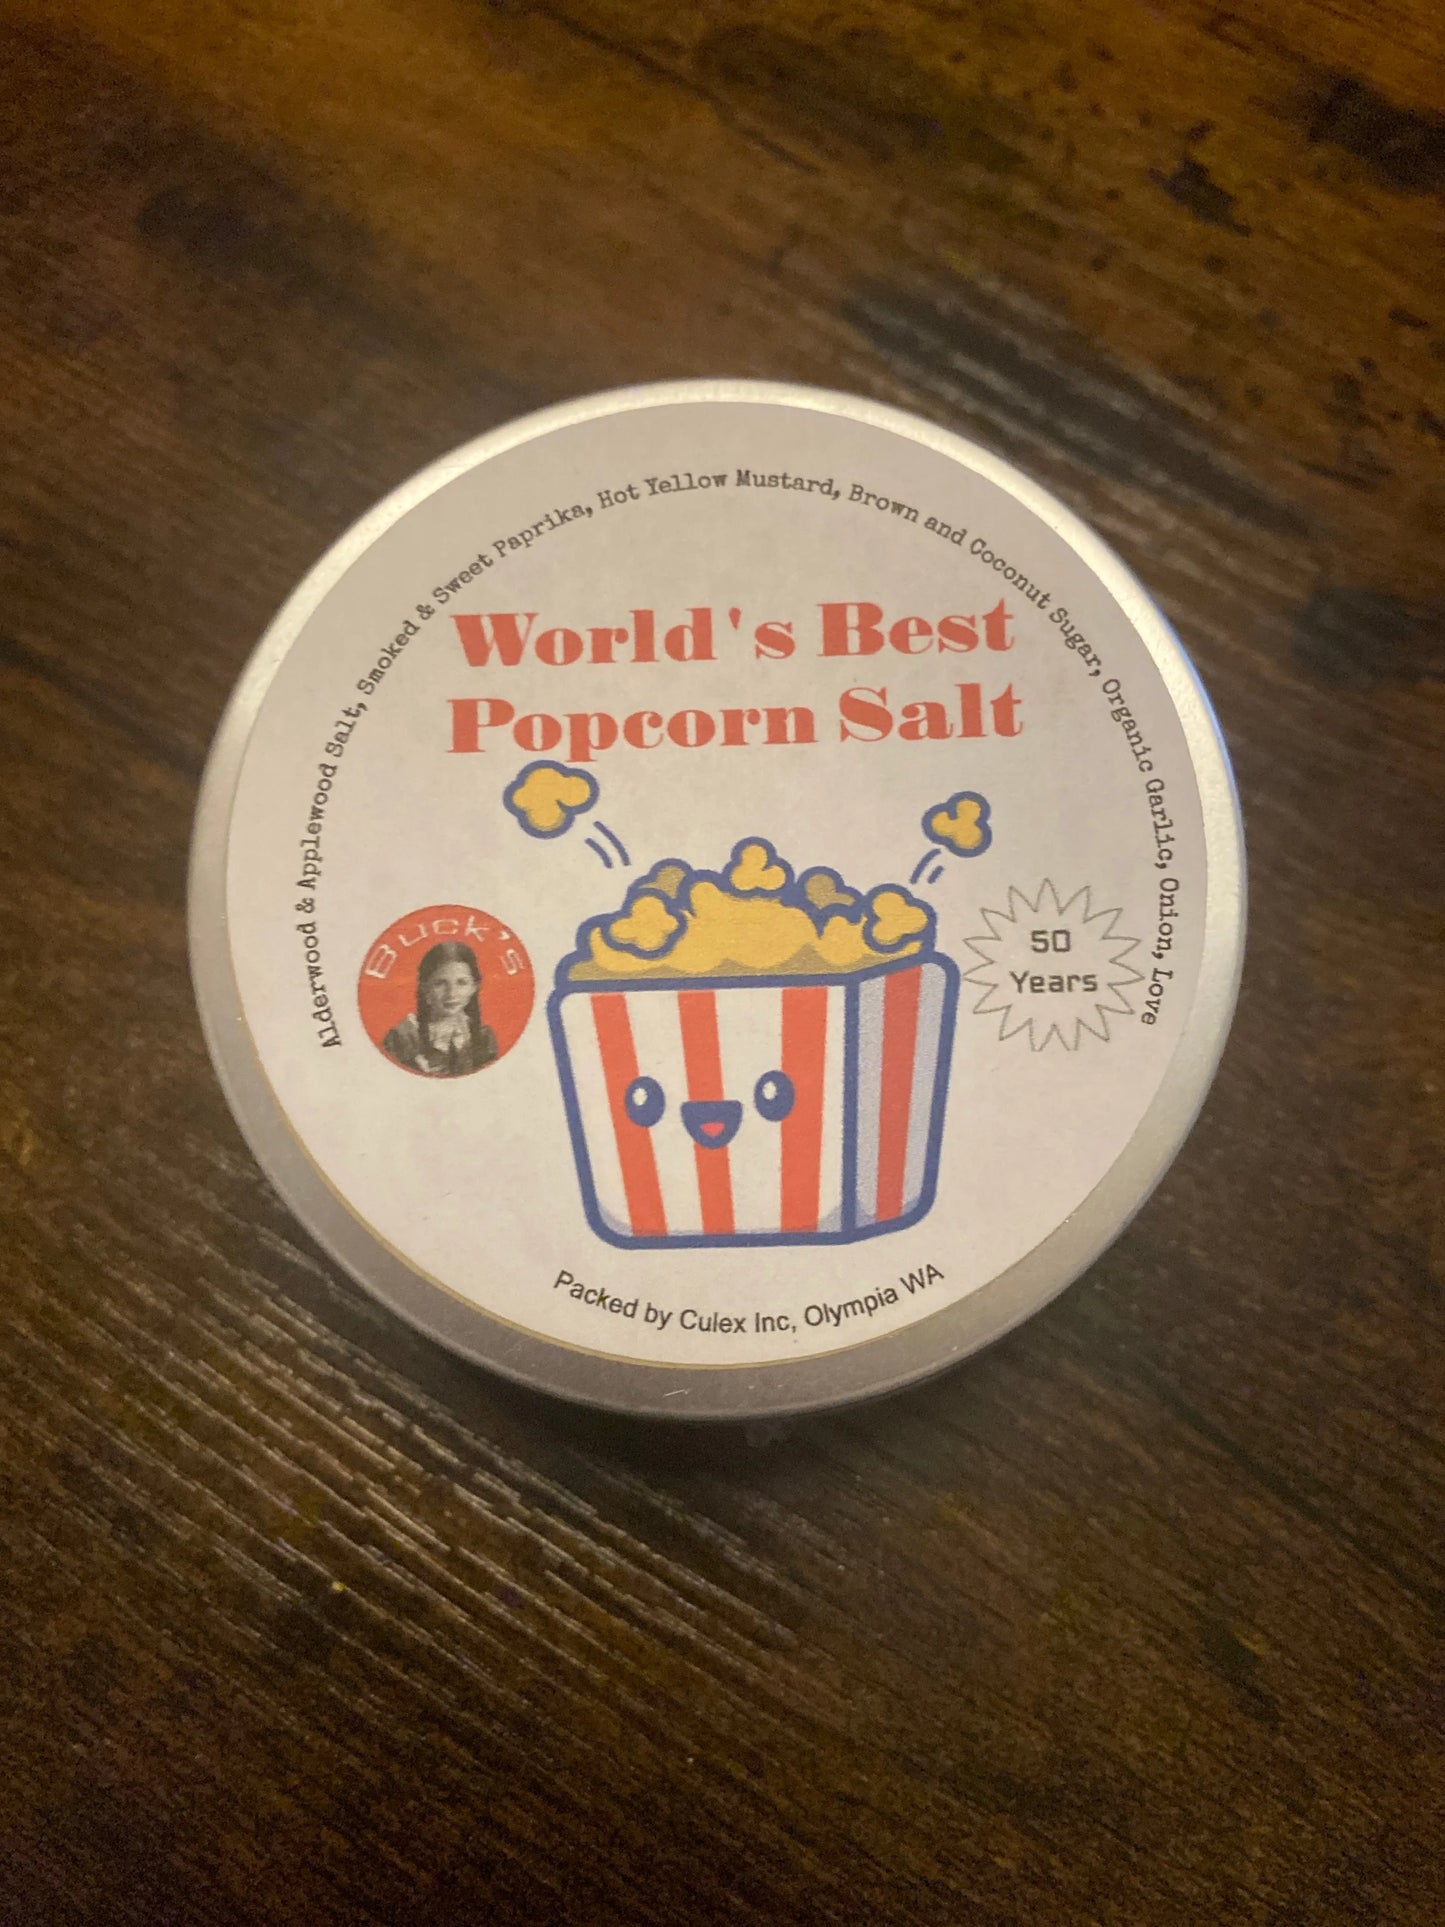 🍿 World's Best Popcorn Salt, Large, in a decorative reusable tin - THE salt for popcorn 🍿